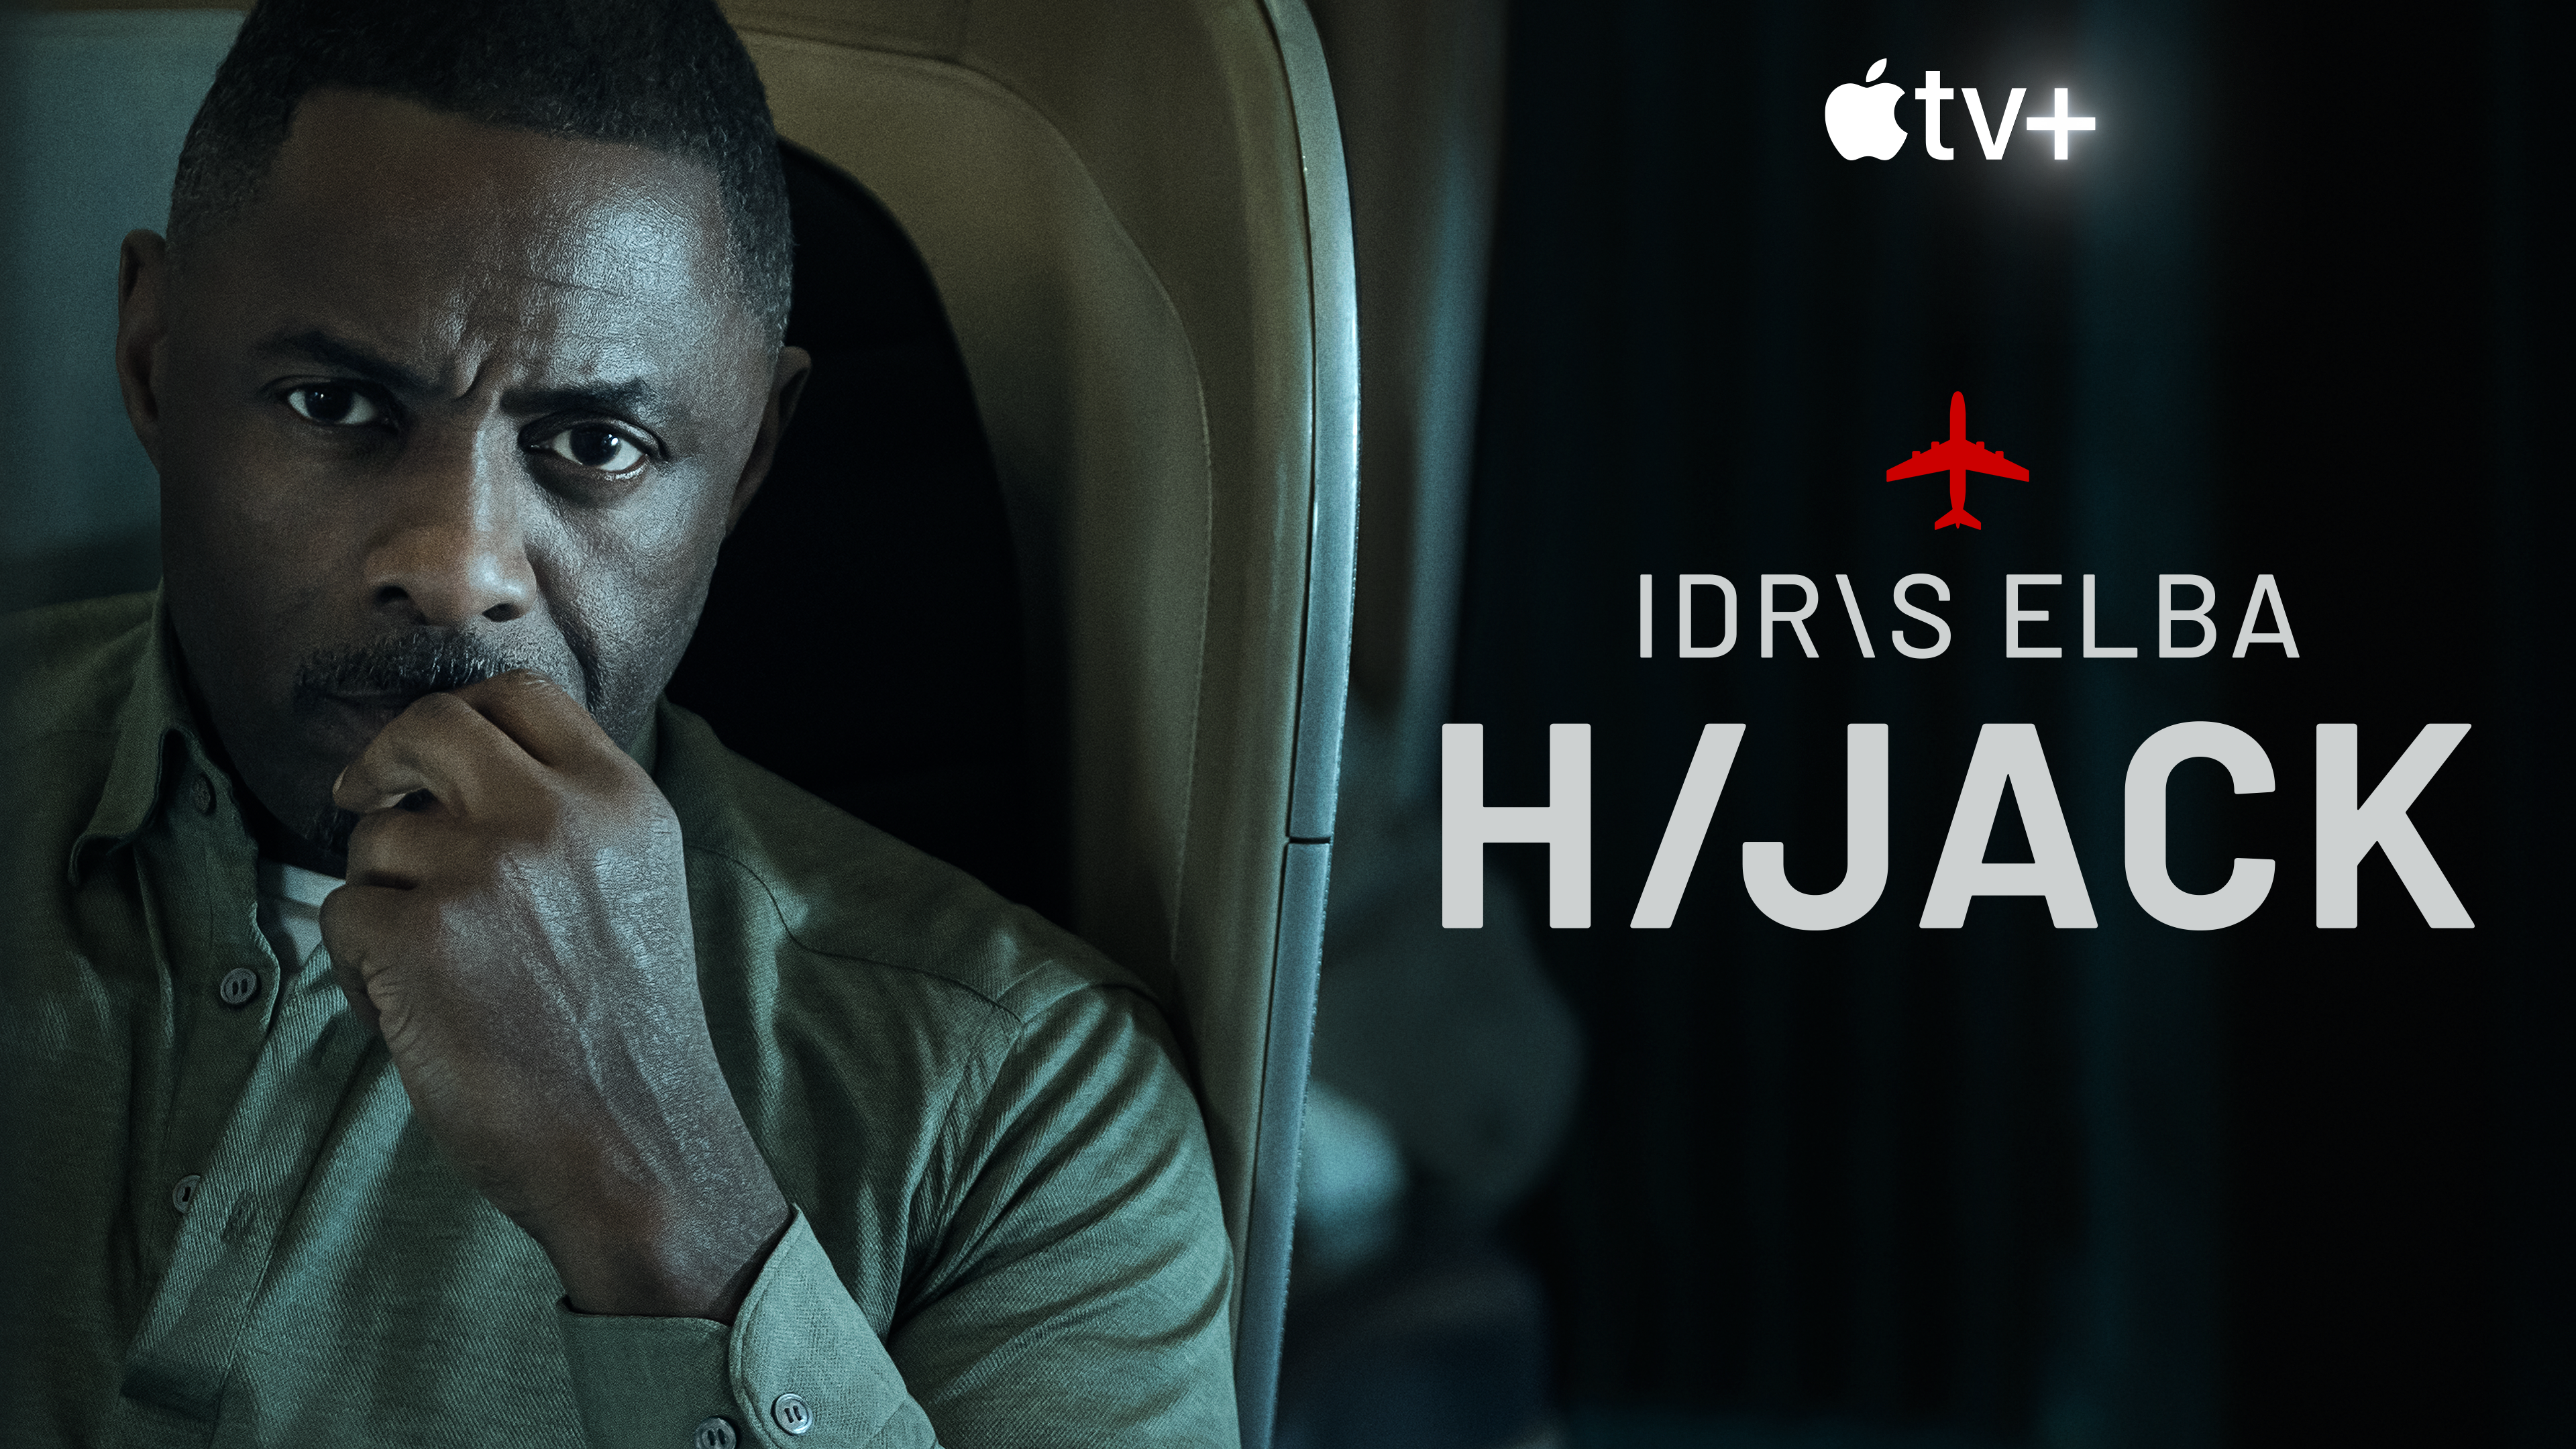 Idris Elba pris en otage en avion dans Hijack, en juin sur Apple TV+ !